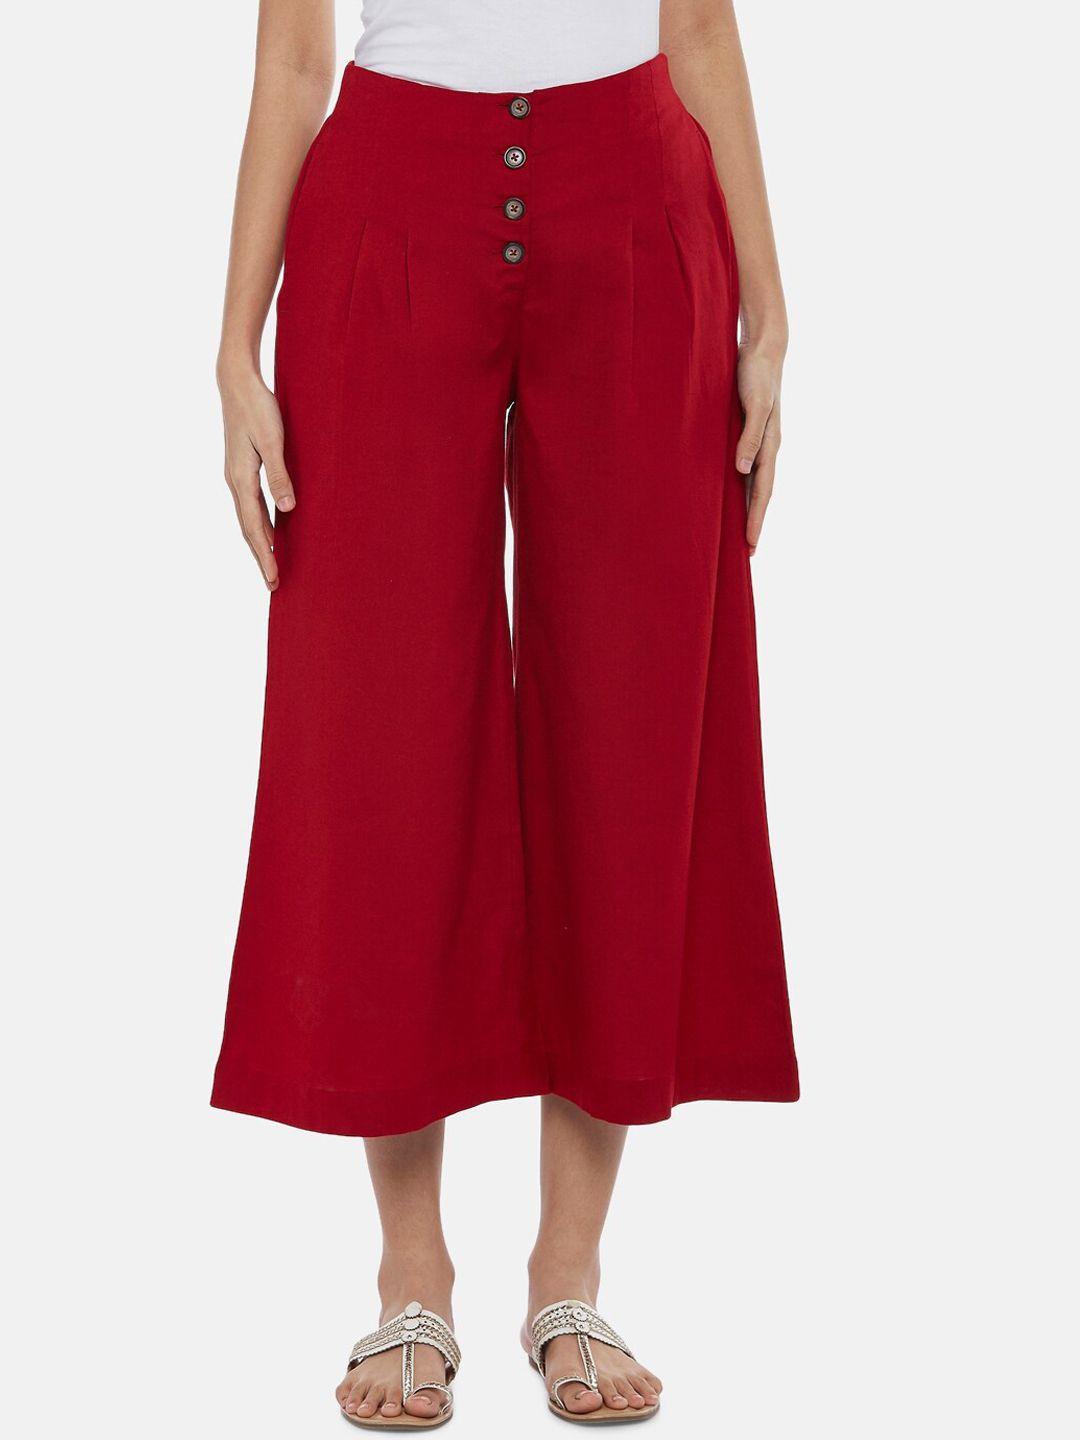 akkriti by pantaloons women maroon culottes trousers